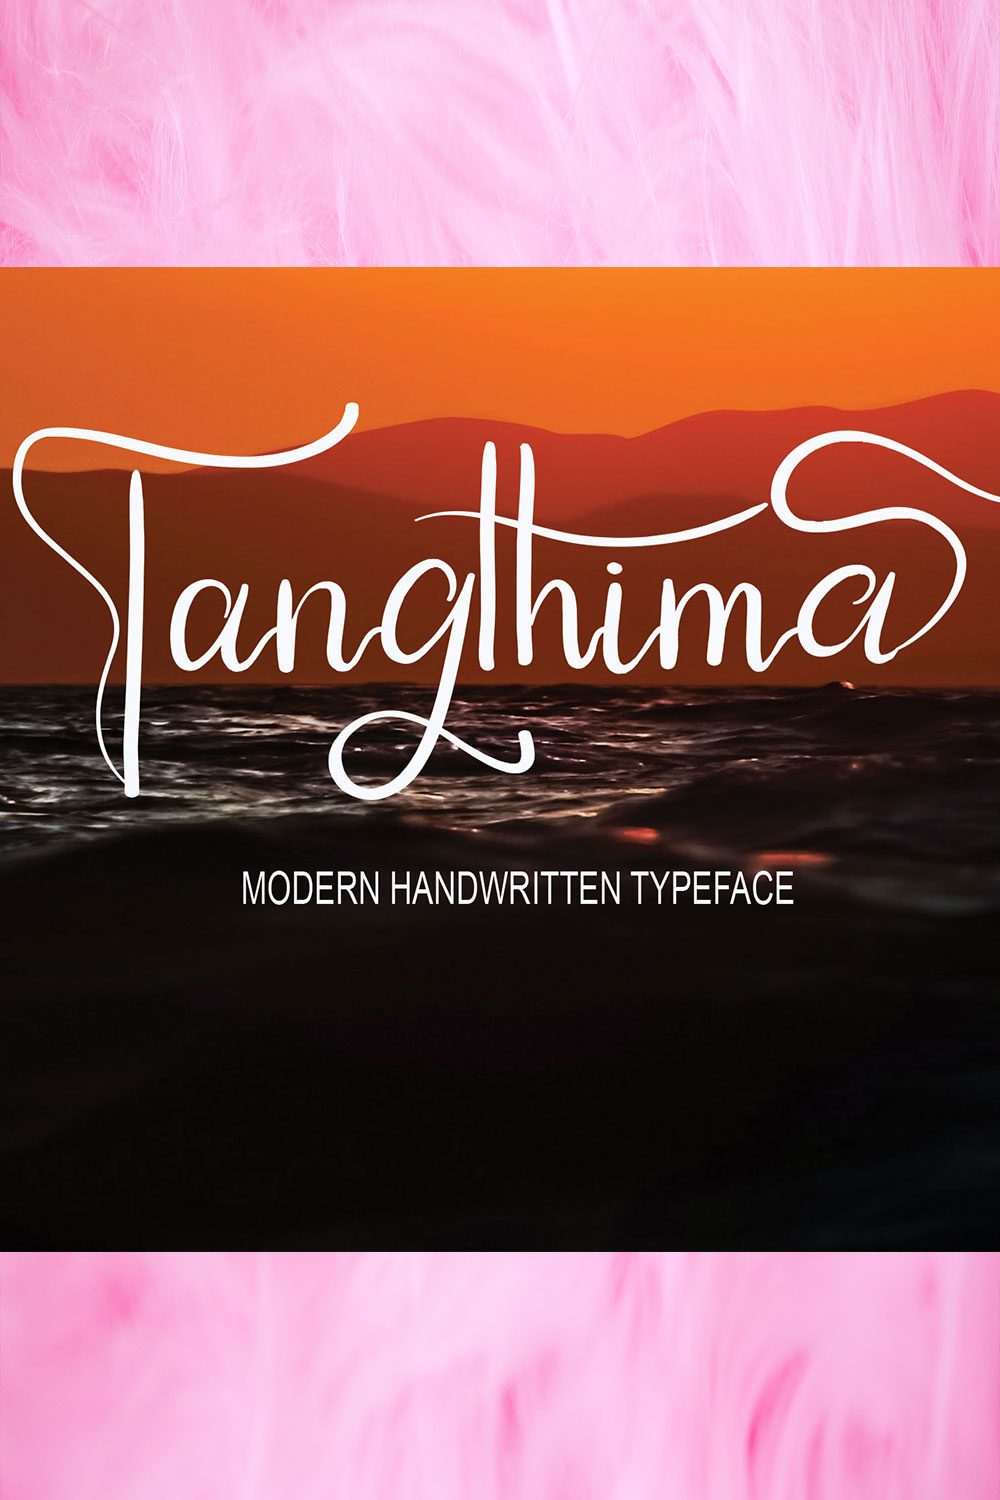 Tangthima Font Script Signature Design pinterest image.